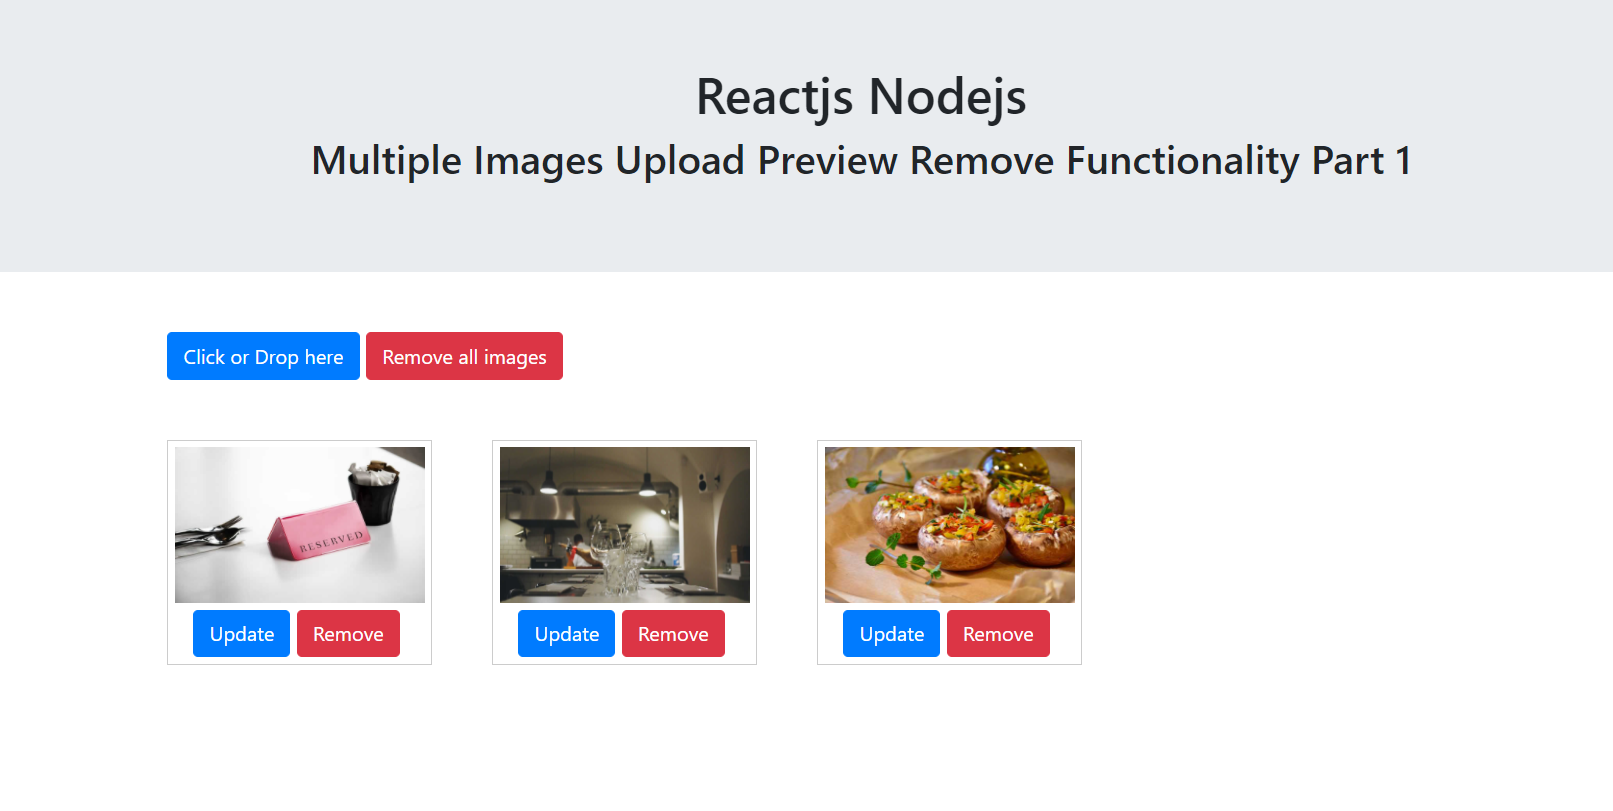 Reactjs Nodejs Multiple Images Upload Preview Remove Functionality Part 1